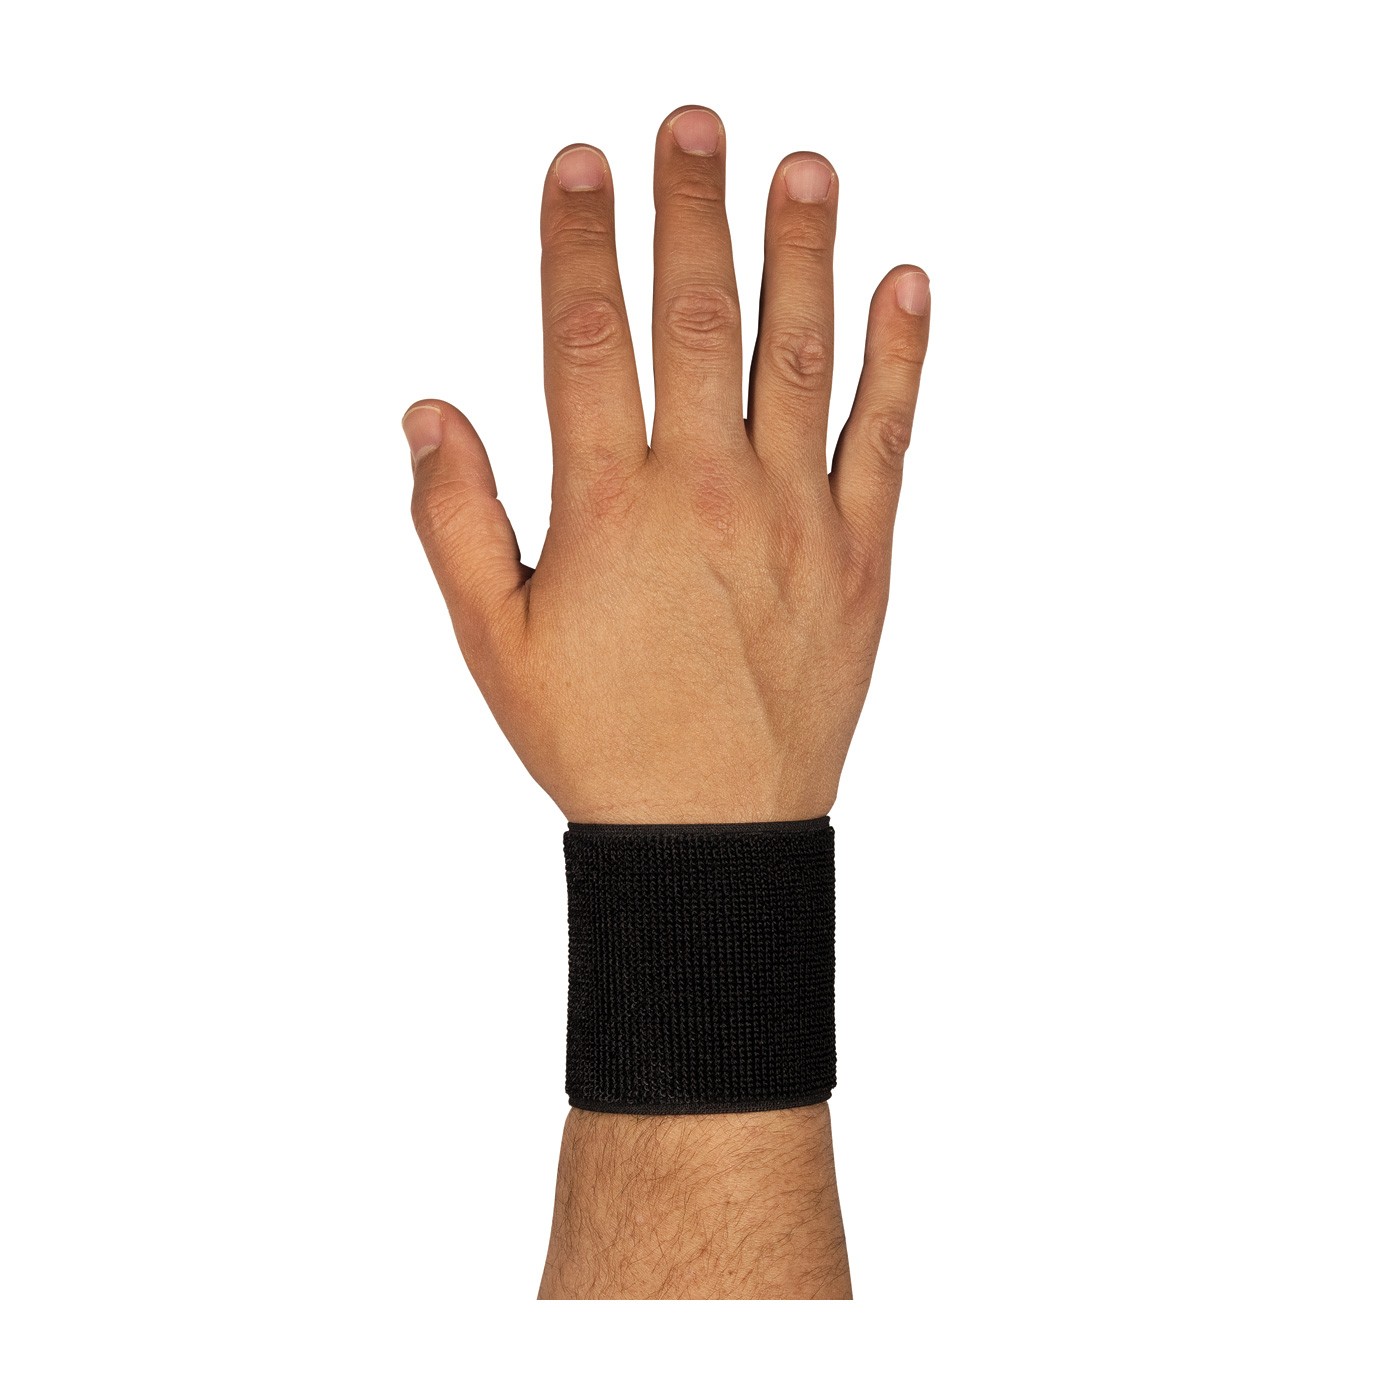 Wrist Support w/ Stays, X-Large 7.5-8", Terry/Neoprene, Hook & Loop Closure